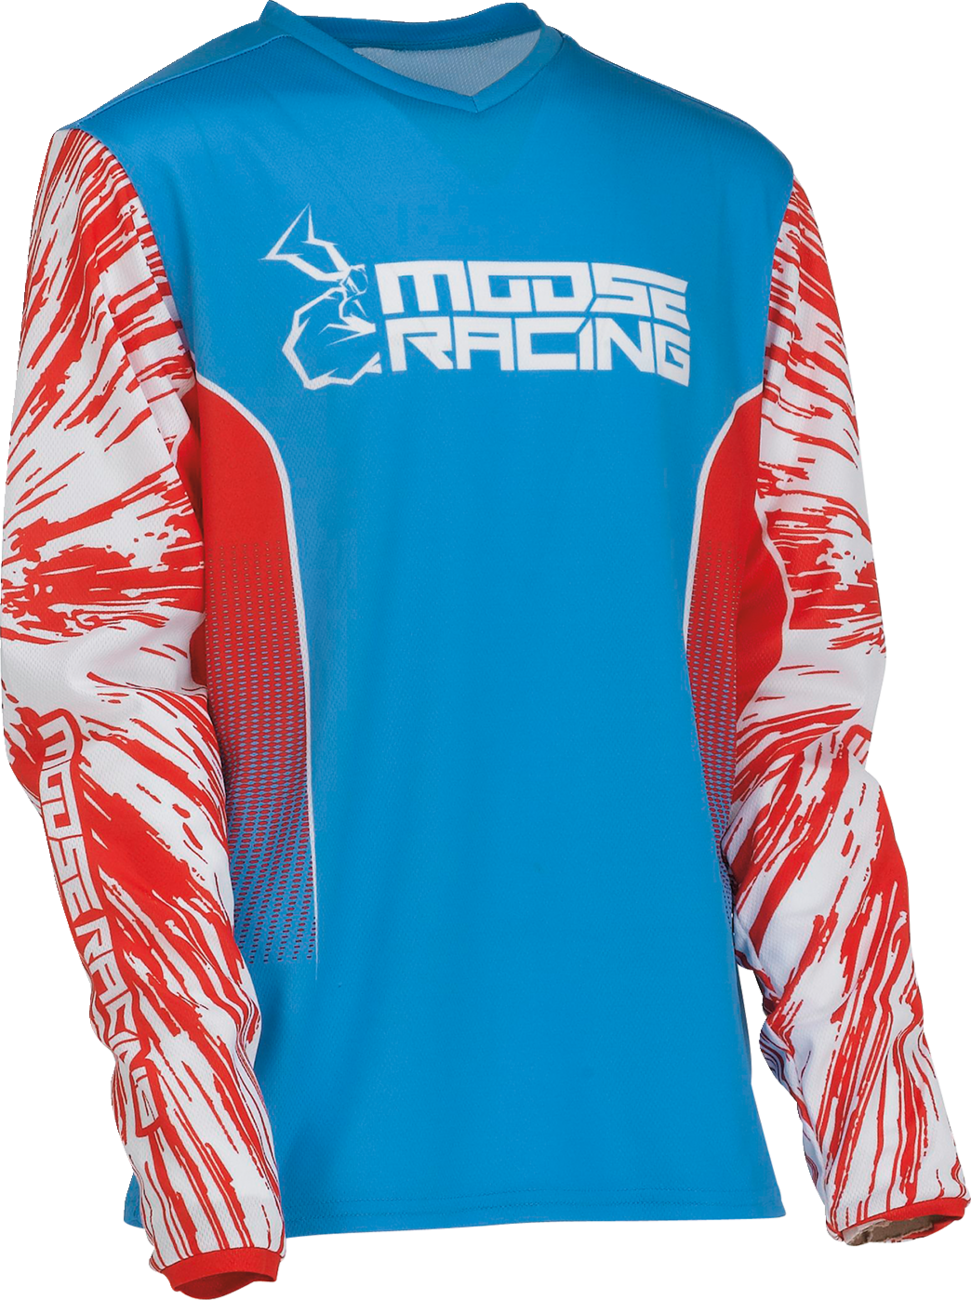 Camiseta juvenil MOOSE RACING Agroid - Rojo/Blanco/Azul - XS 2912-2261 